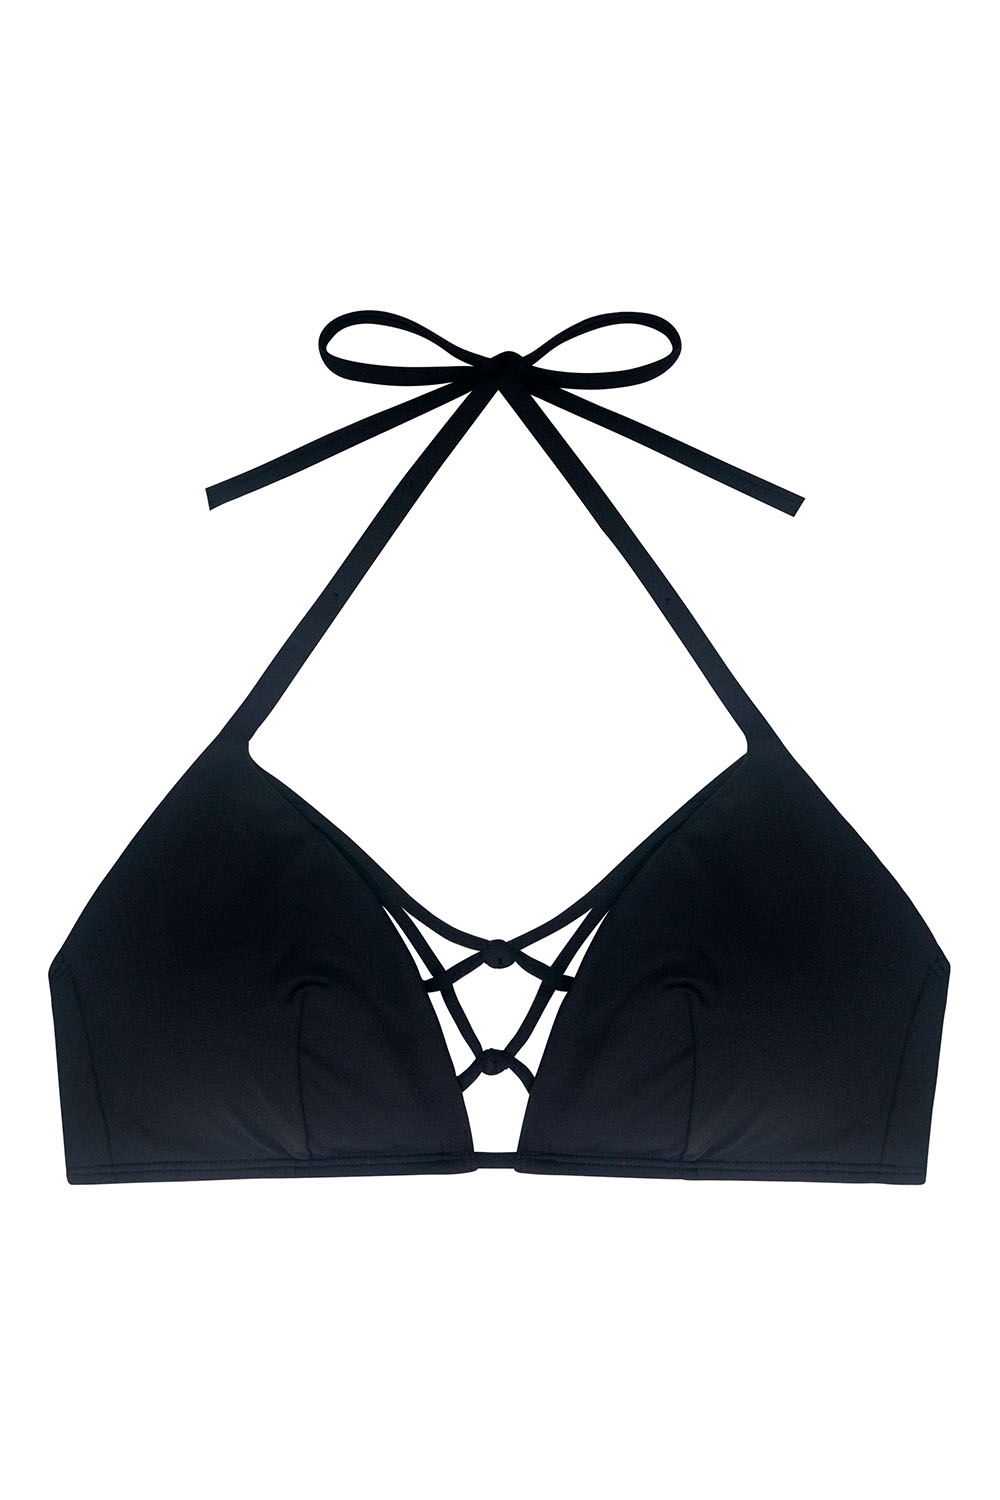 Dorina St Barts Black Triangle Bikini Top | Odel.lk